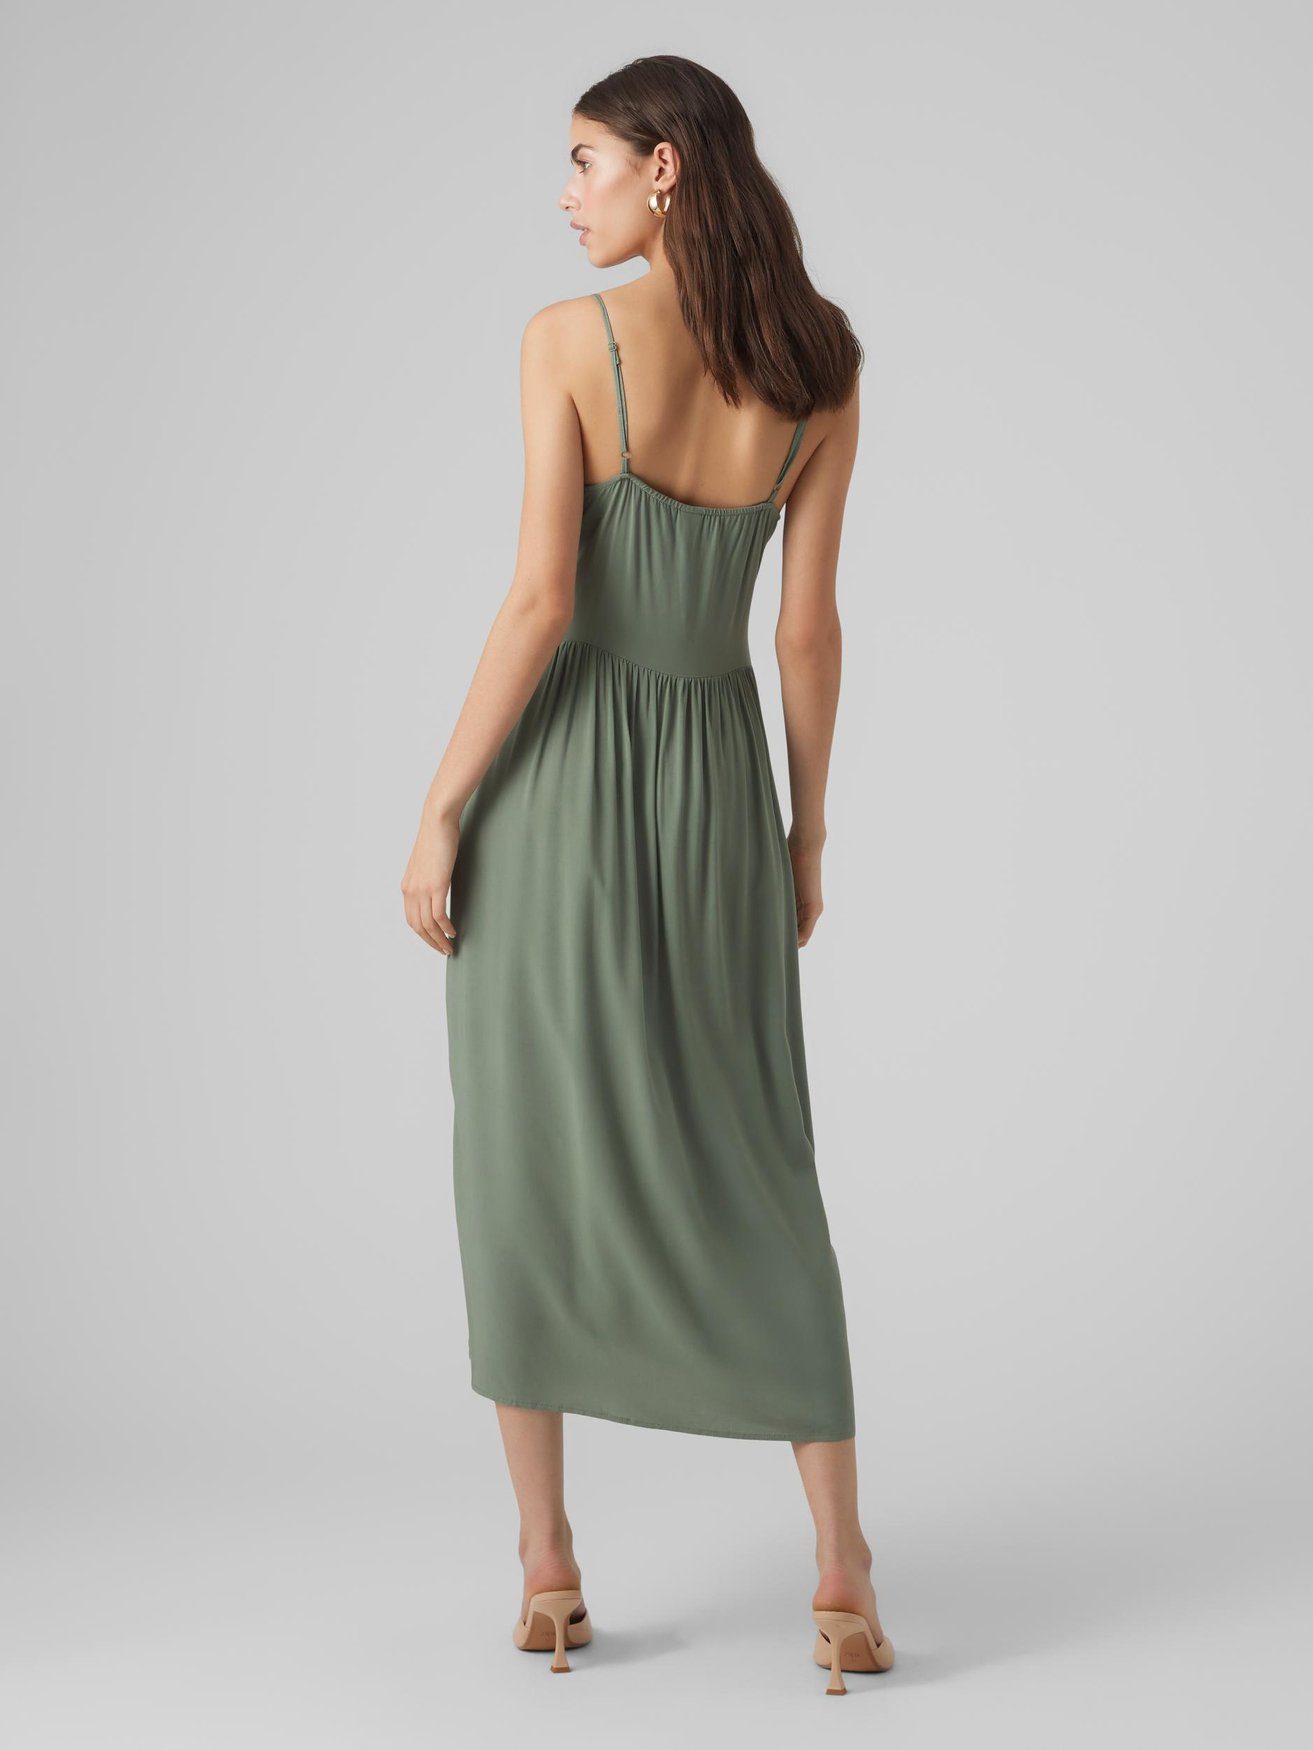 5763 Ärmelloses Grün-2 Kleid in Basic Shirtkleid Langes (lang) Moda Vero VMALBA